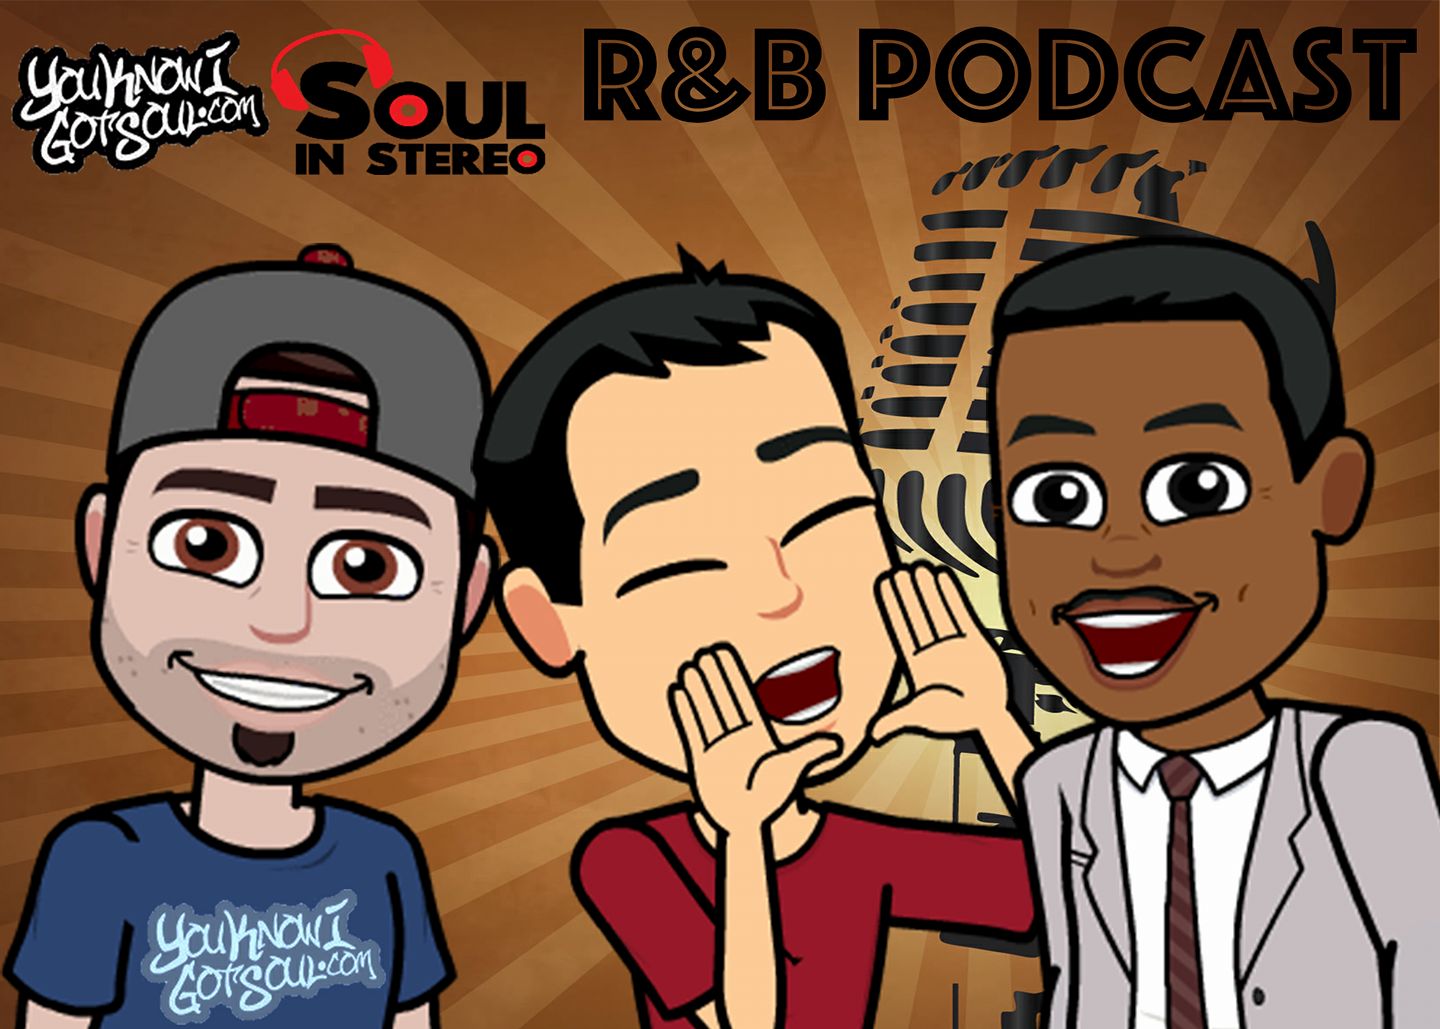 Please Unblock Us Keyshia Cole, We Love You! – YouKnowIGotSoul R&B Podcast Episode #67